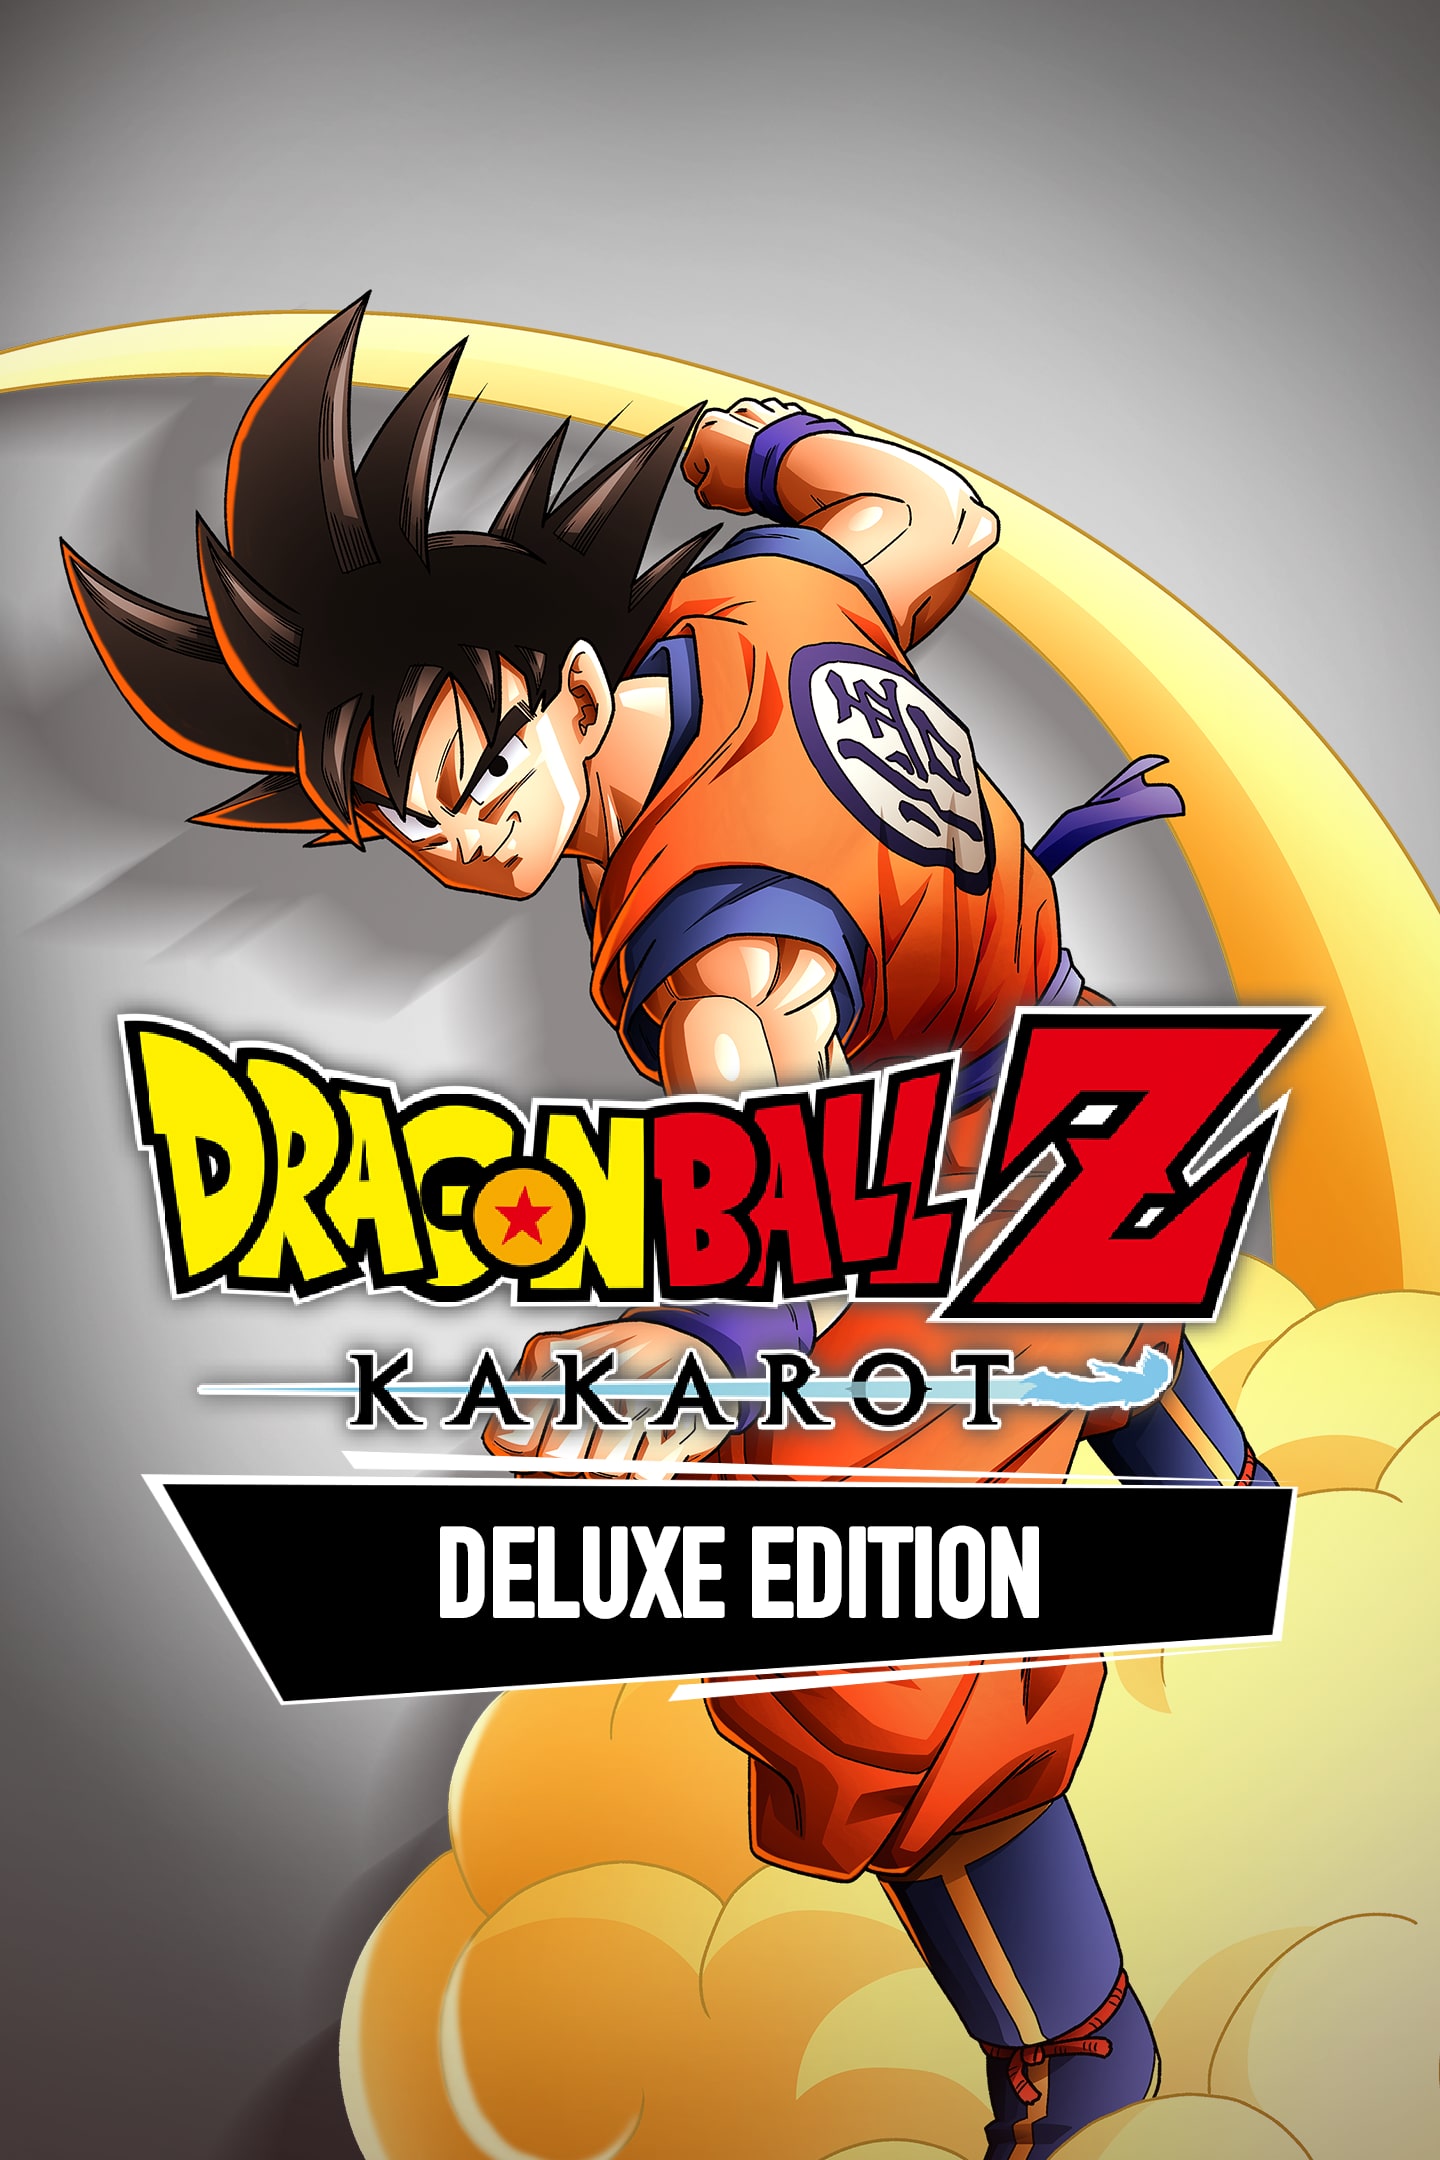 Dragon Ball Z [ Kakarot ] (PS4) NEW